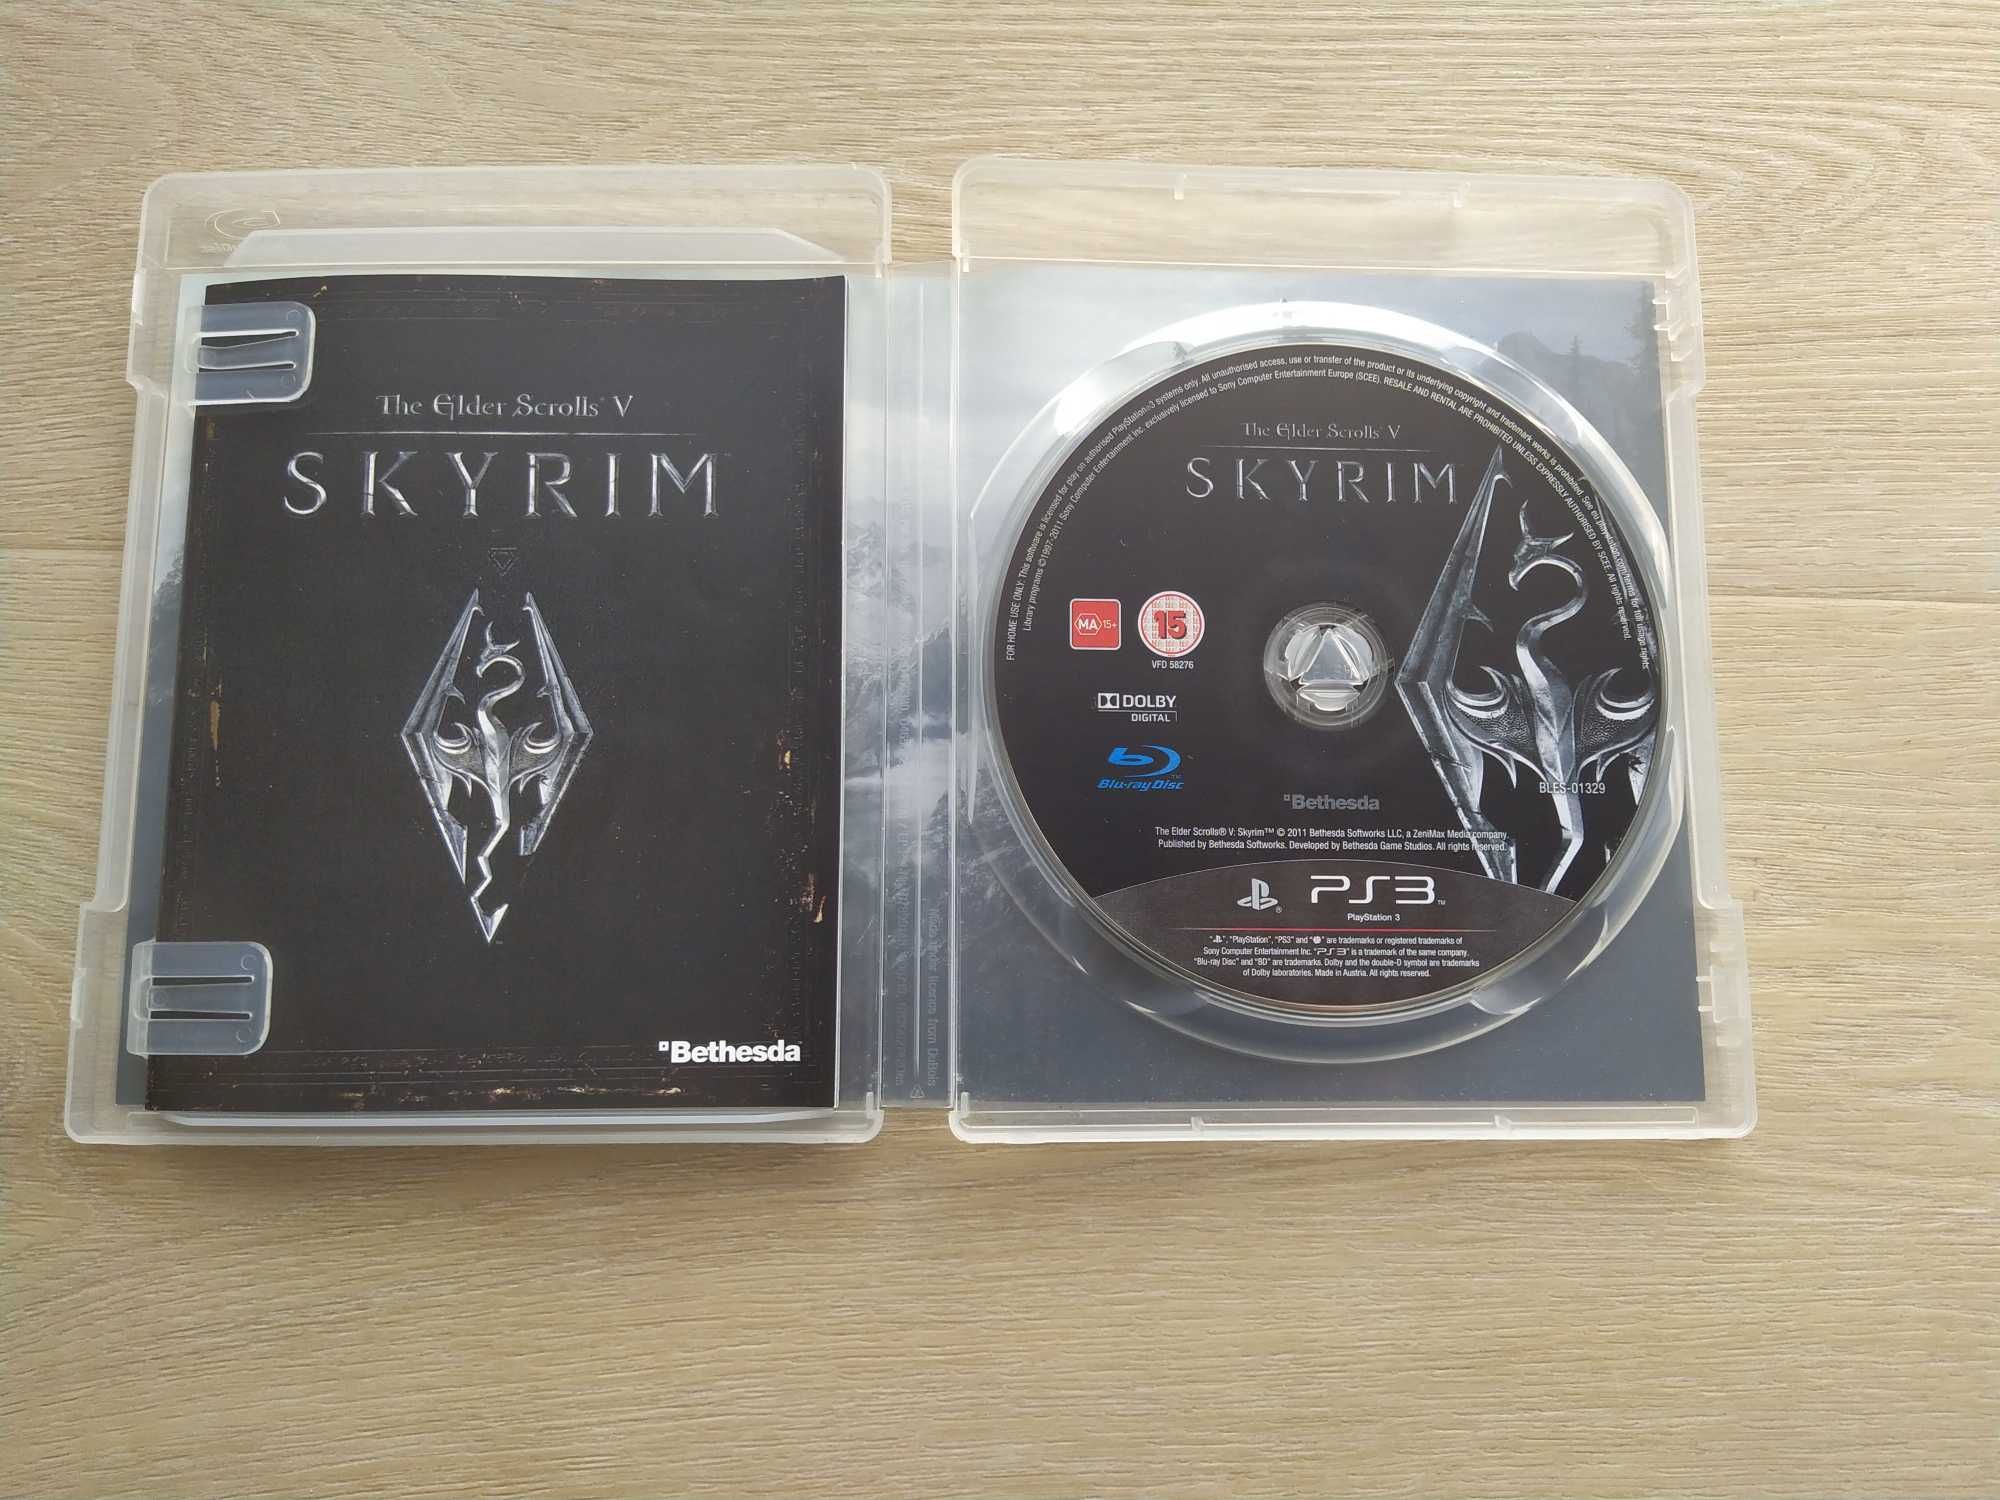 The Elder Scrolls V: Skyrim [PS3]